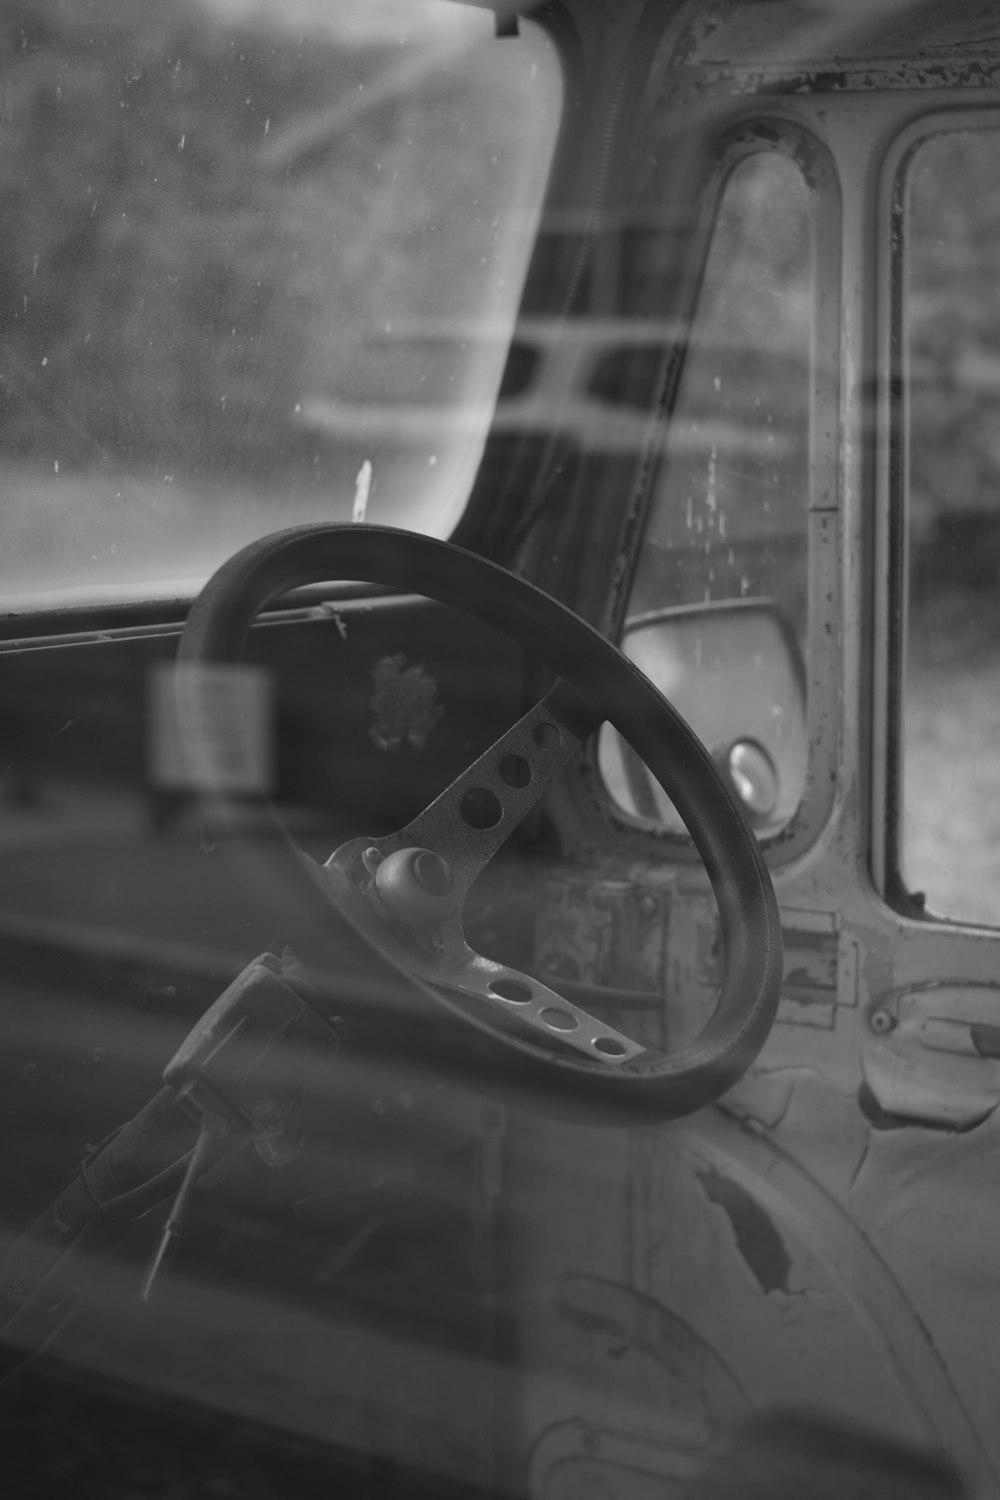 grayscale photo of car steering wheel